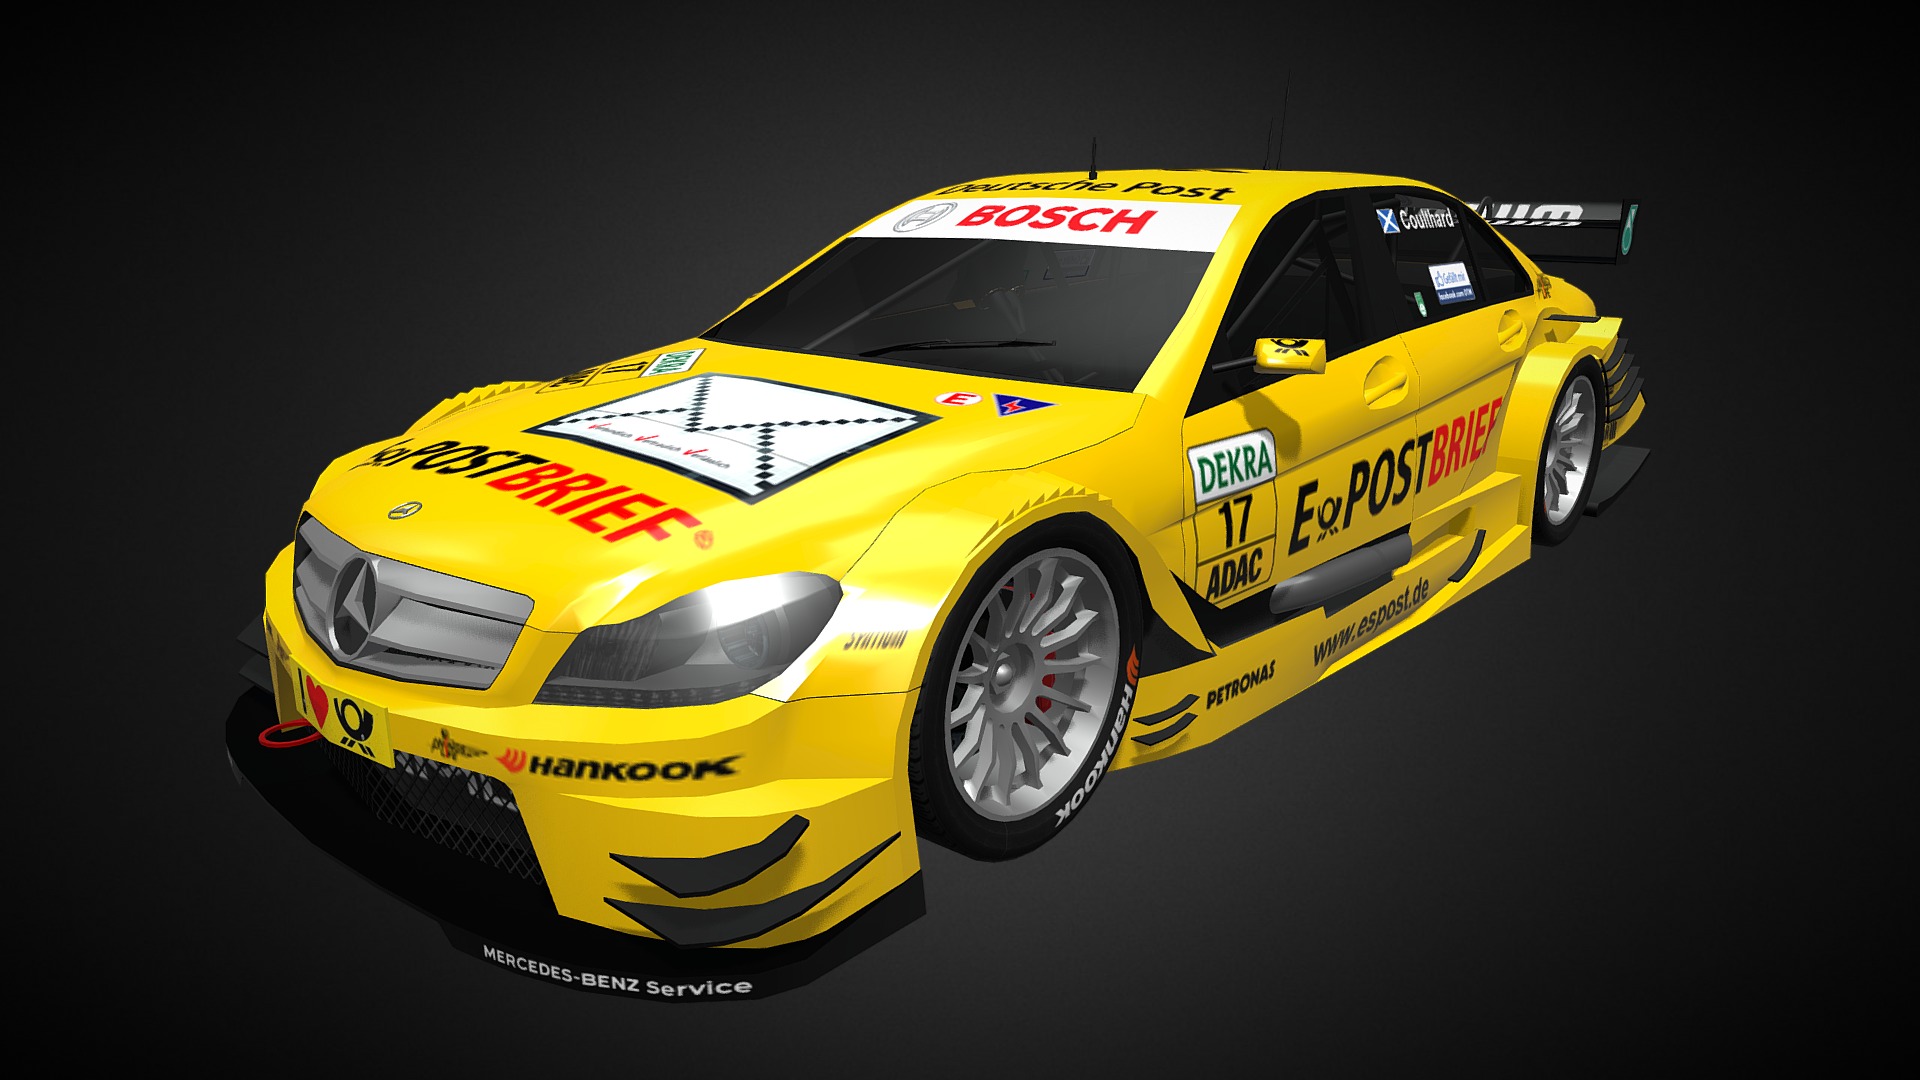 3D model AMG-Mercedes Clase C DTM 2011 – David Coulthard - This is a 3D model of the AMG-Mercedes Clase C DTM 2011 - David Coulthard. The 3D model is about a yellow race car.